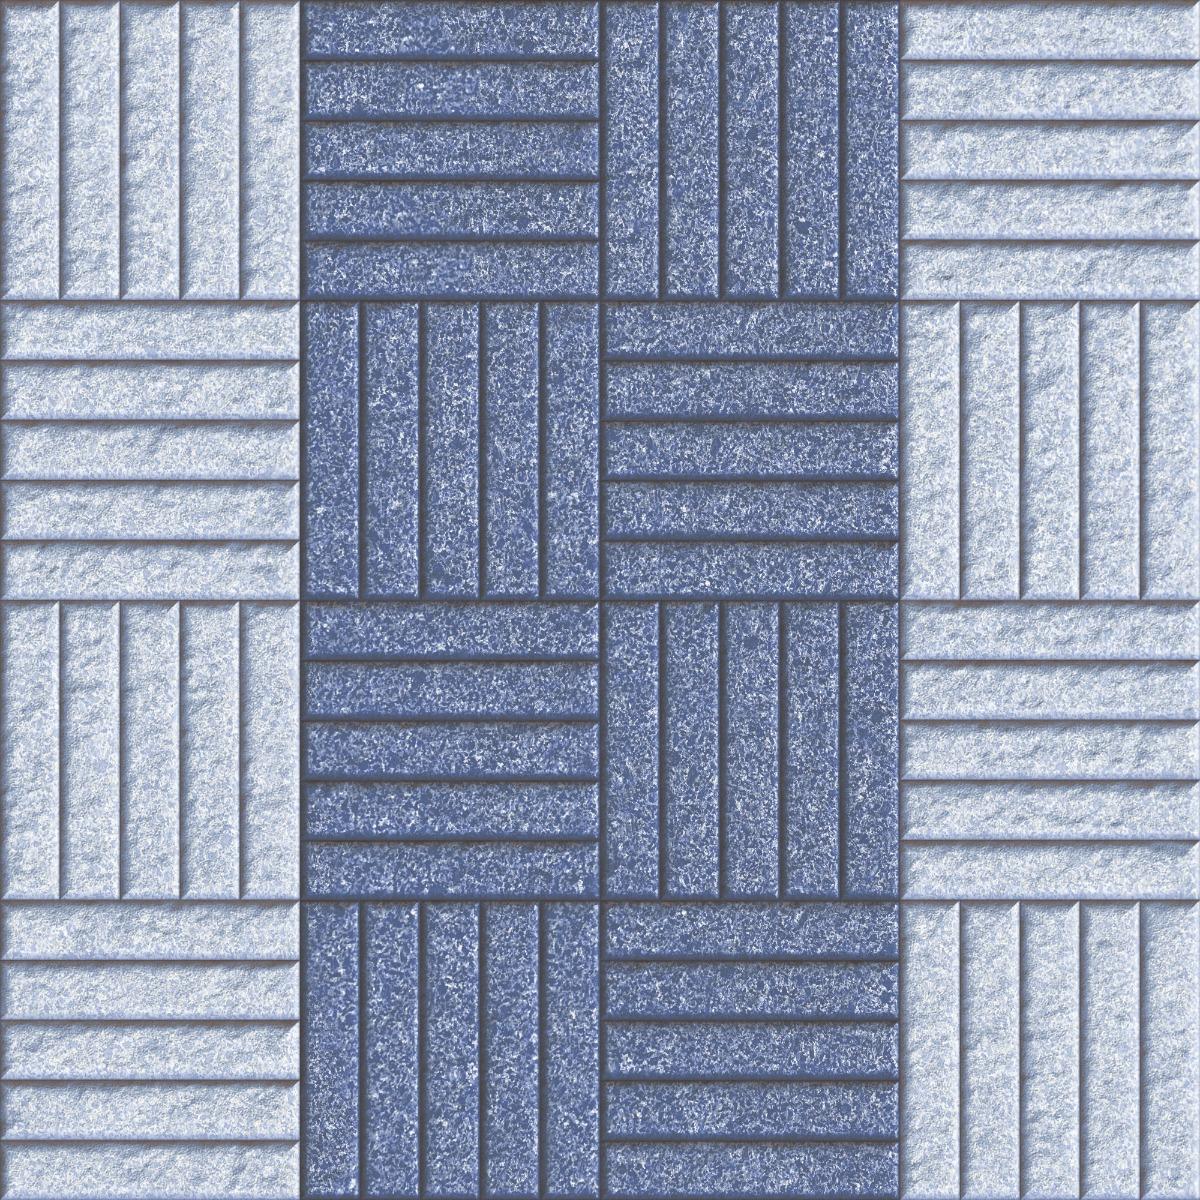 Office Tiles for Commercial Tiles, Parking Tiles, Office Tiles, Pathway Tiles, Hospital Tiles, High Traffic Tiles, Bar/Restaurant, Outdoor Area, Porch/Parking